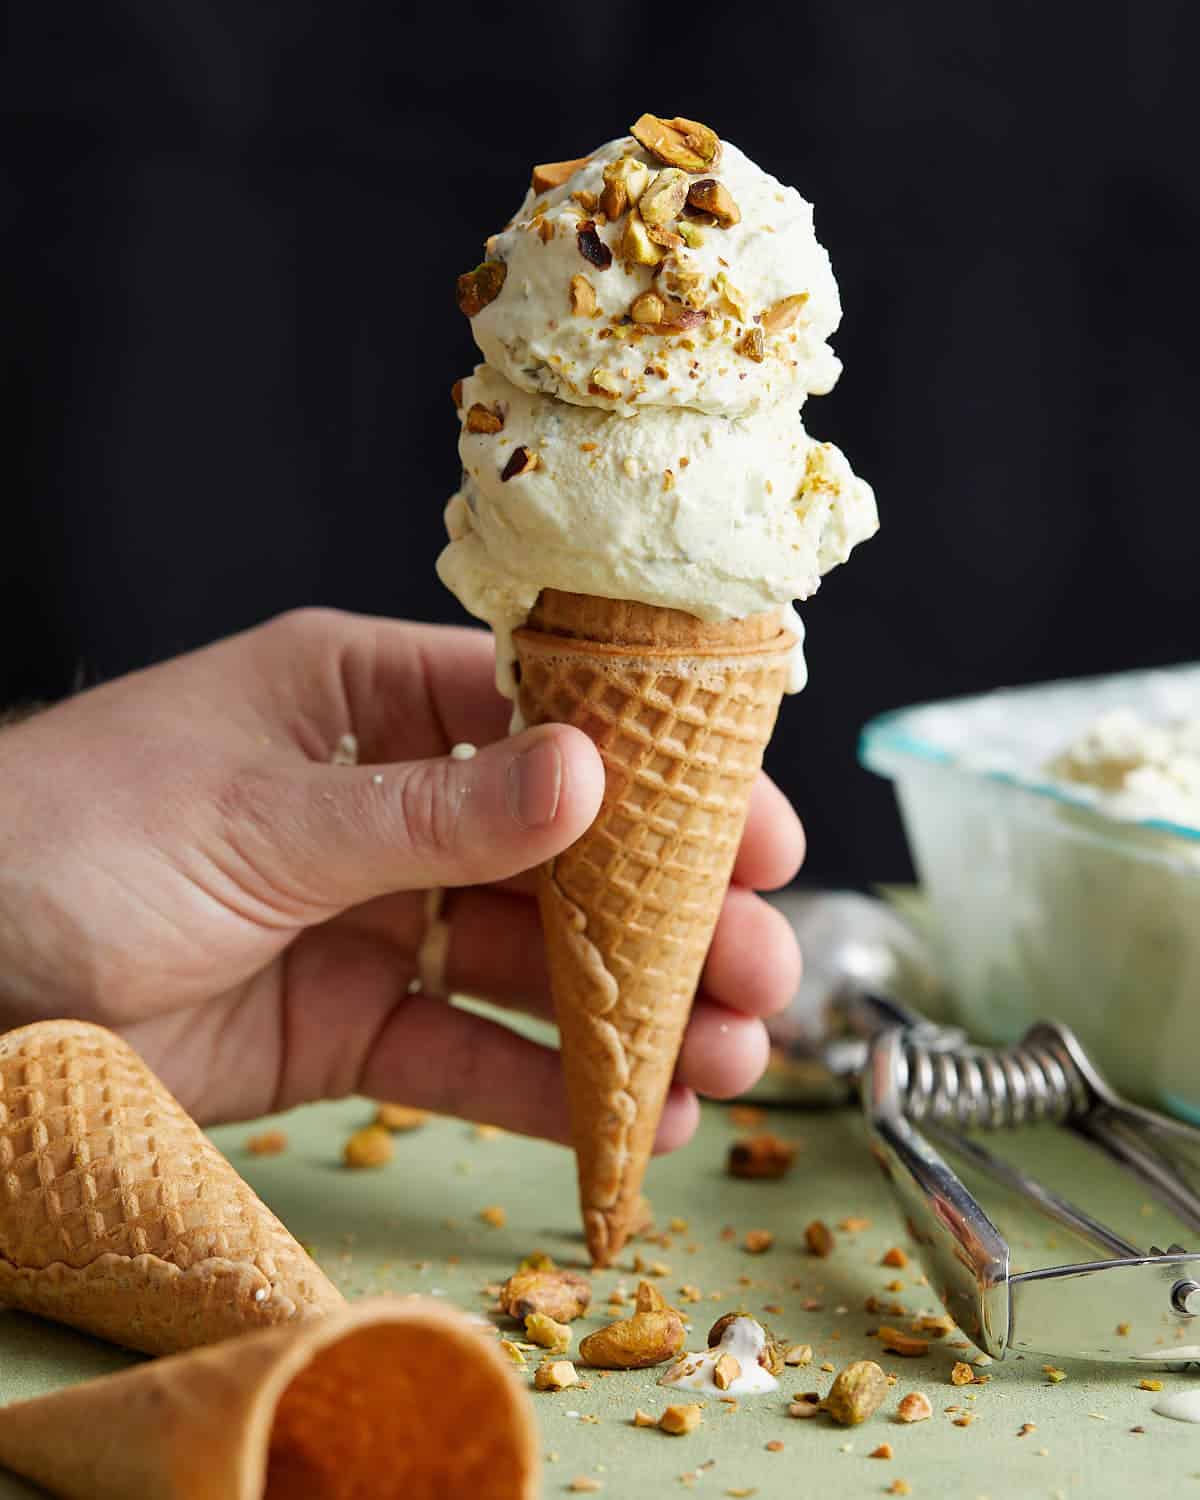 Up close photo of pistachio ice cream on a waffle cone.